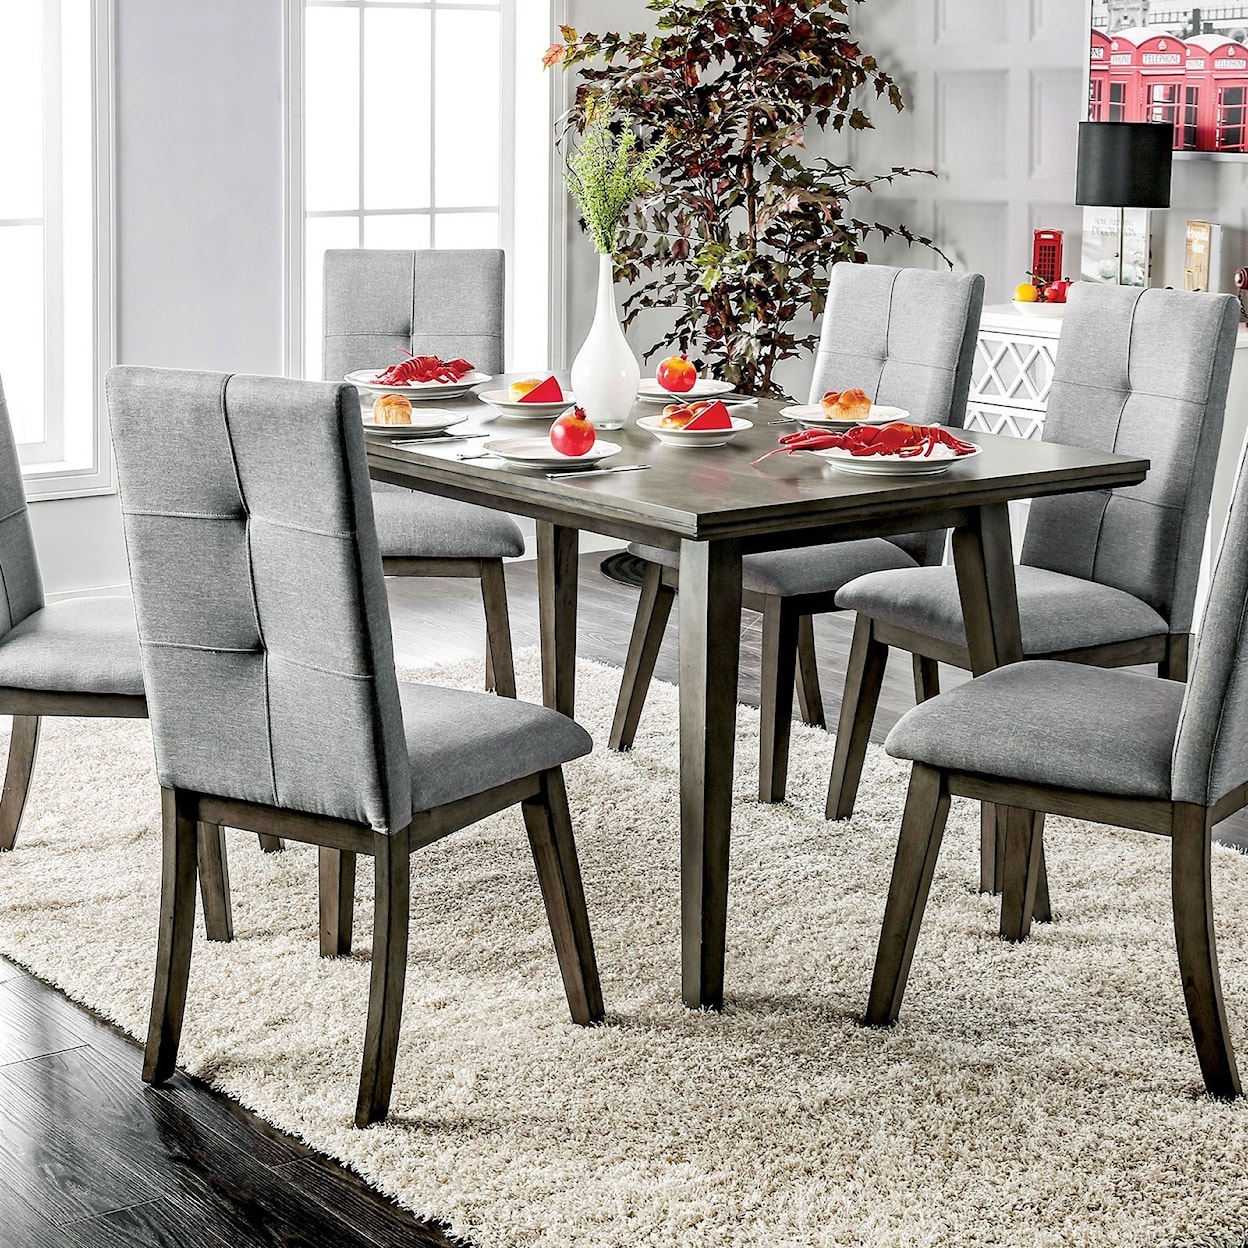 Furniture of America - FOA Abelone Dining Table